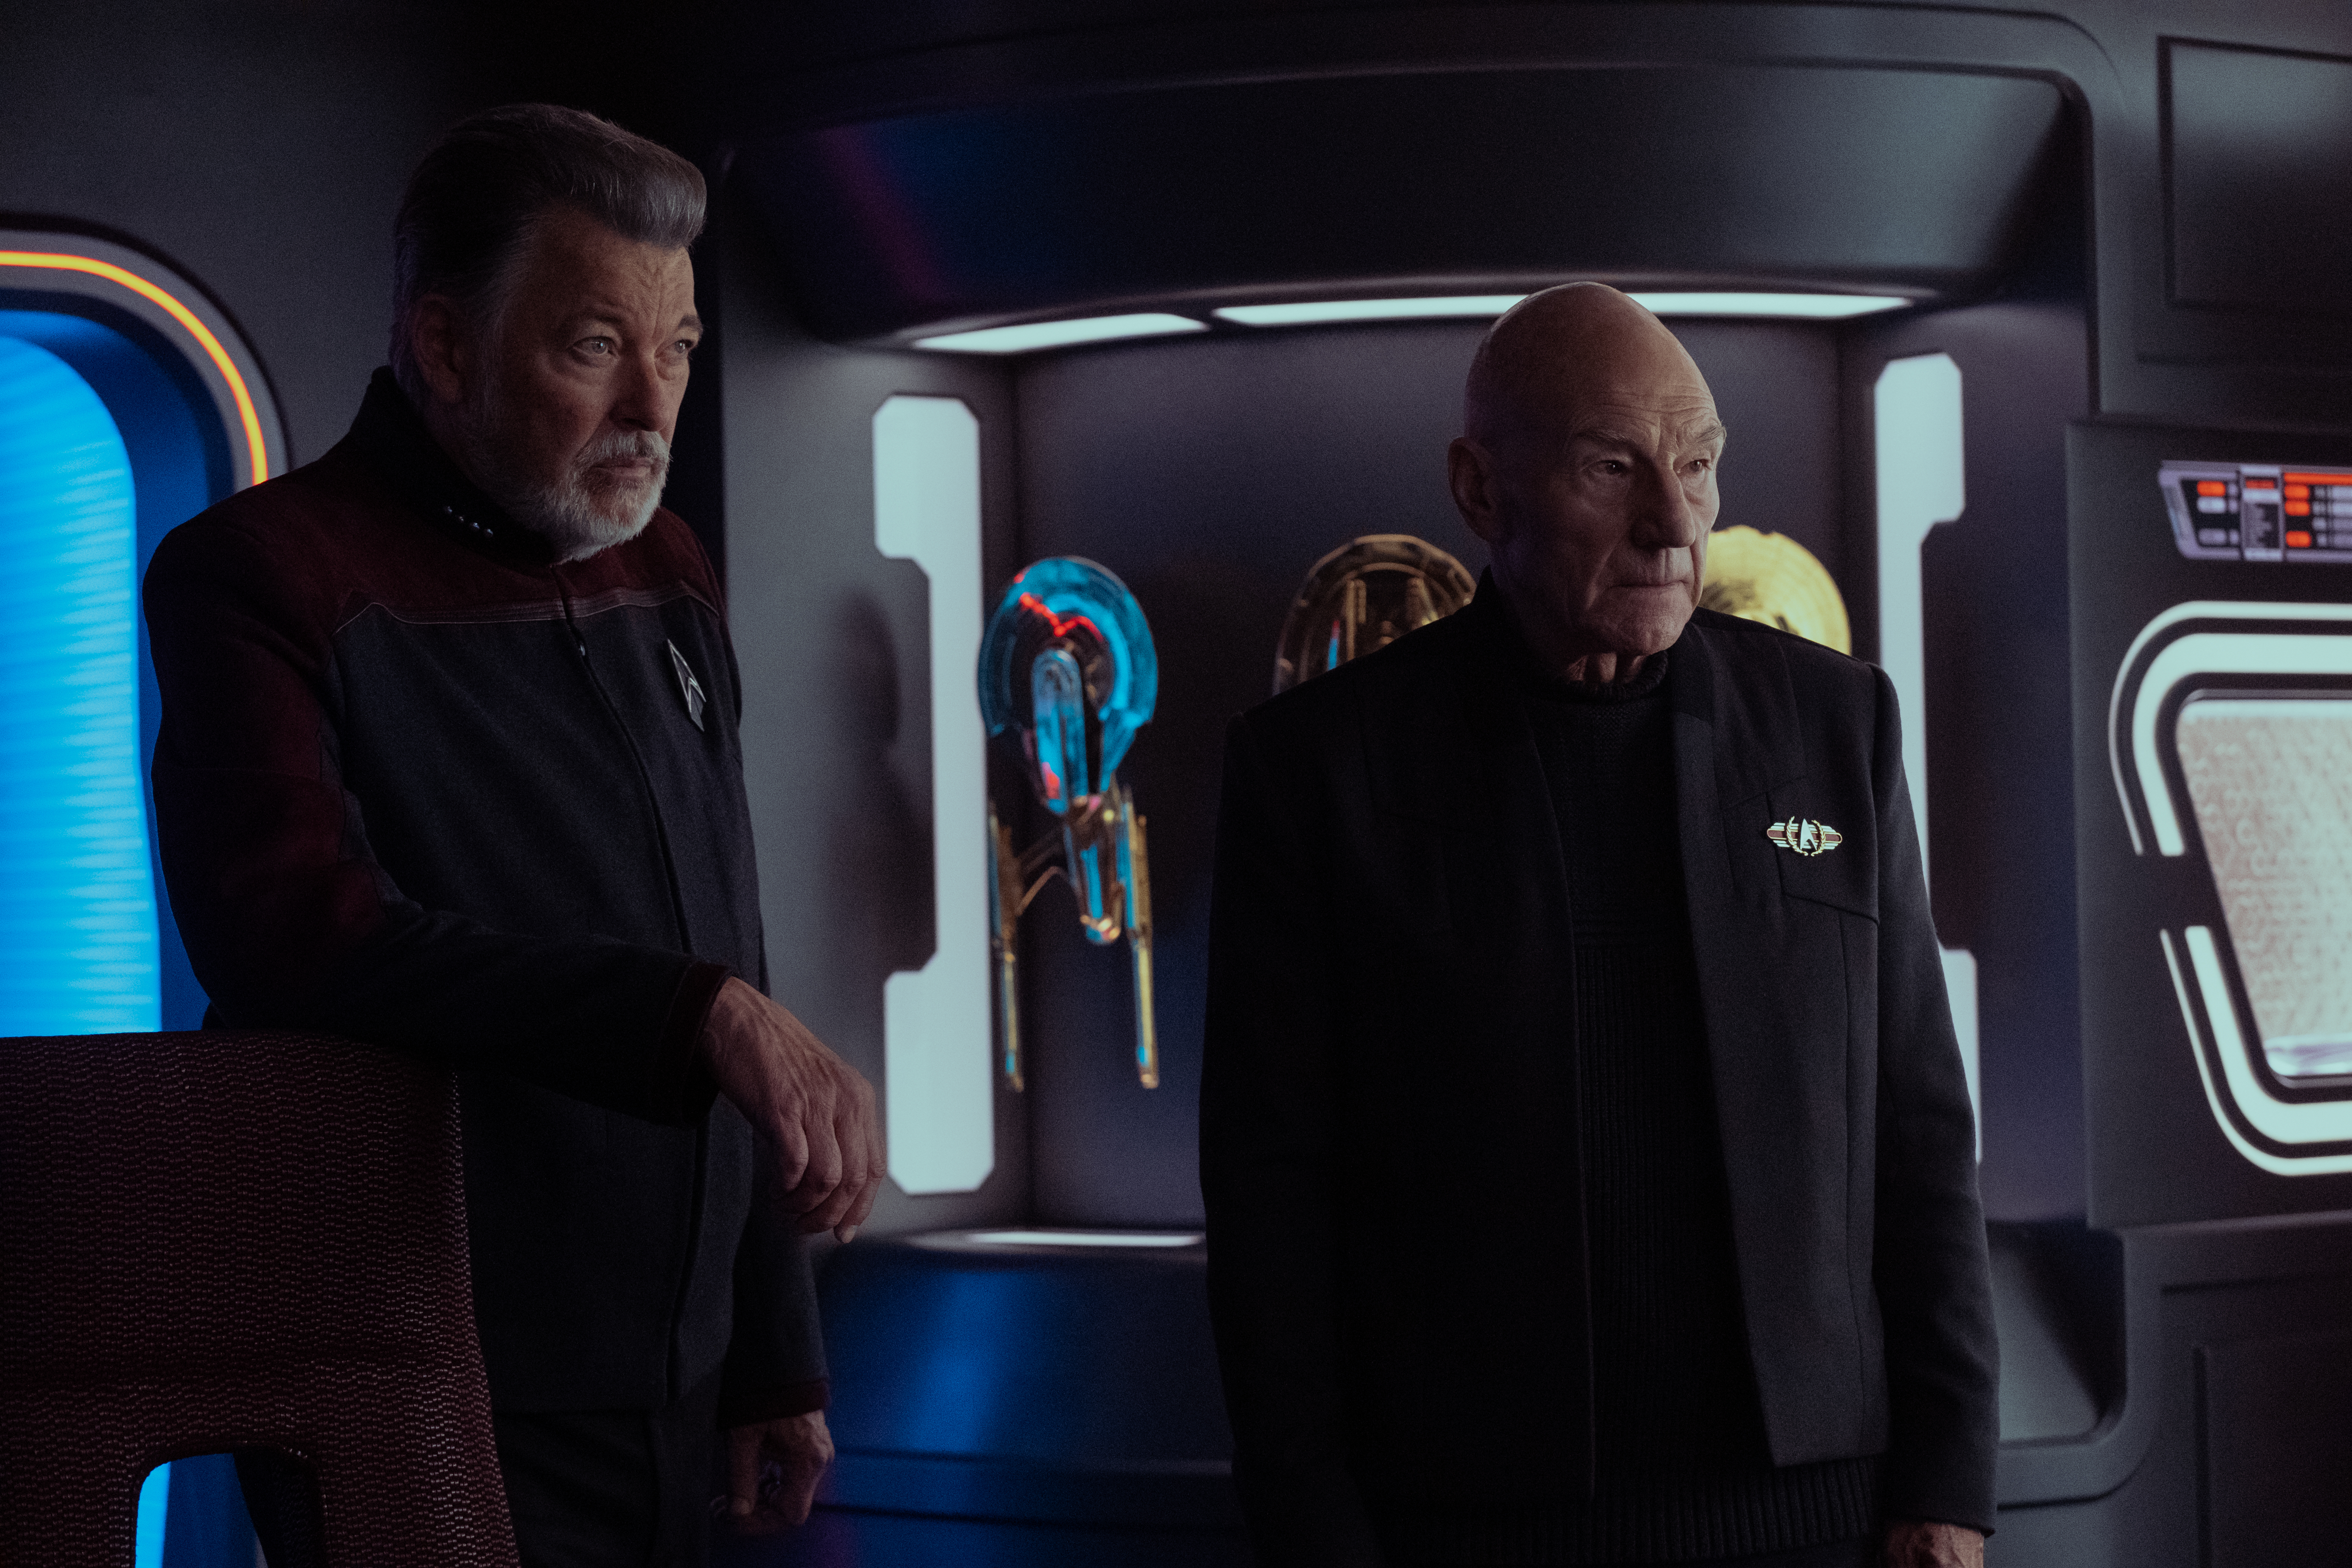 Riker (Jonathan Frakes) and Picard (Patrick Stewart) stand and look at something